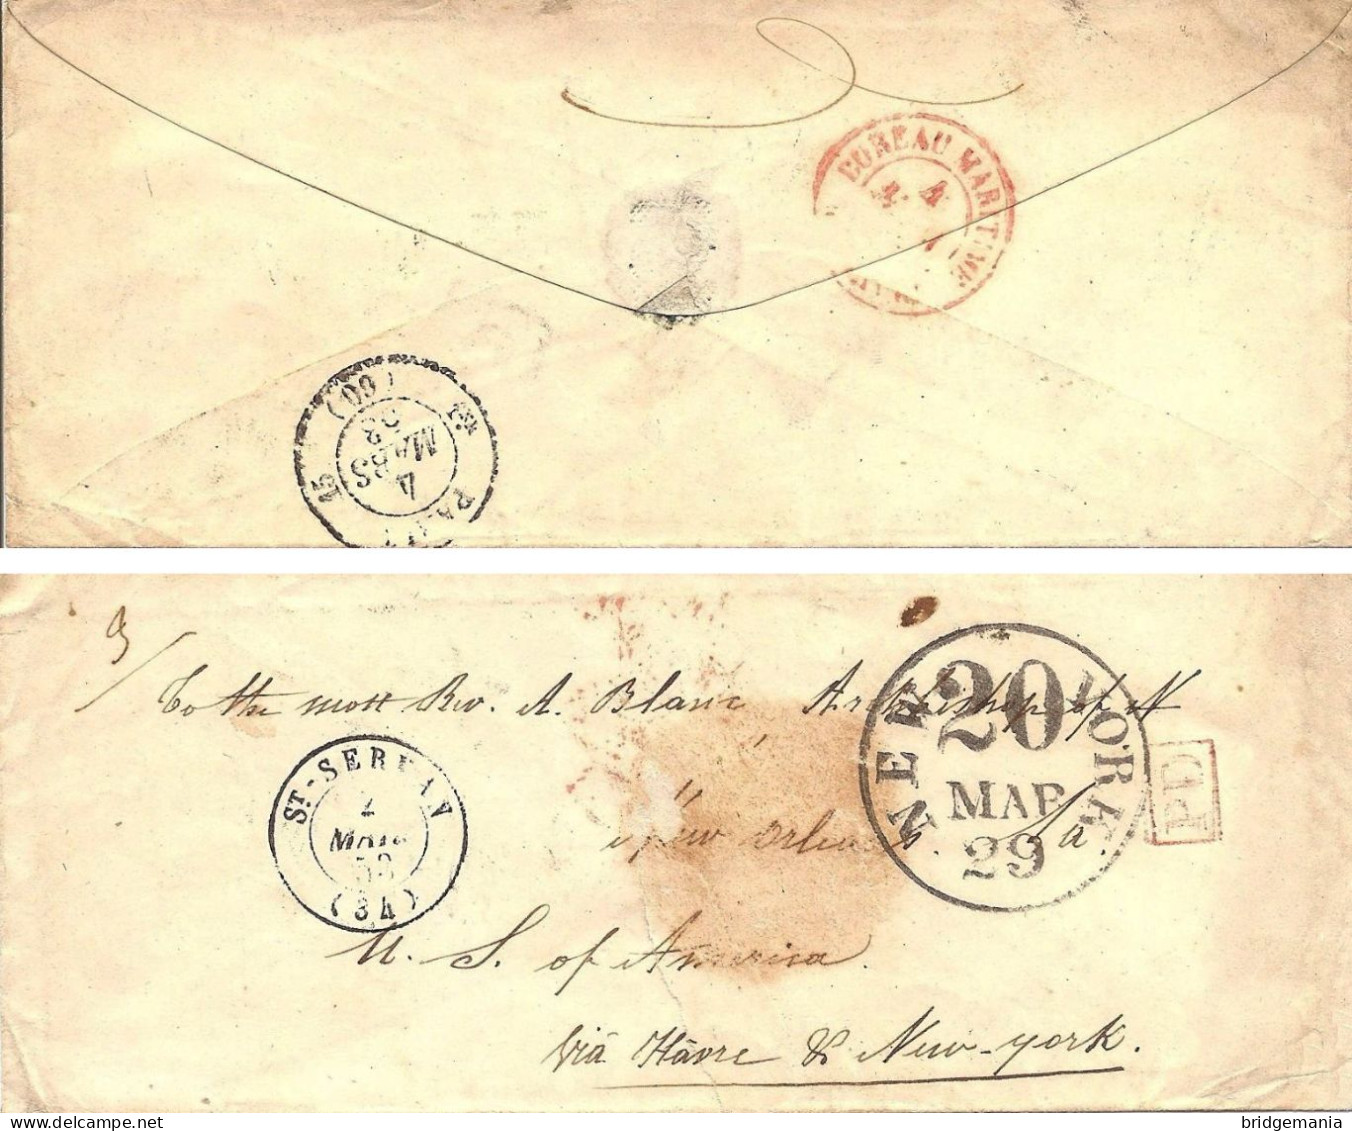 MTM129 - 1853 TRANSATLANTIC LETTER FRANCE TO USA STEAMER FRANKLIN THE HAVRE LINE - Marcofilia